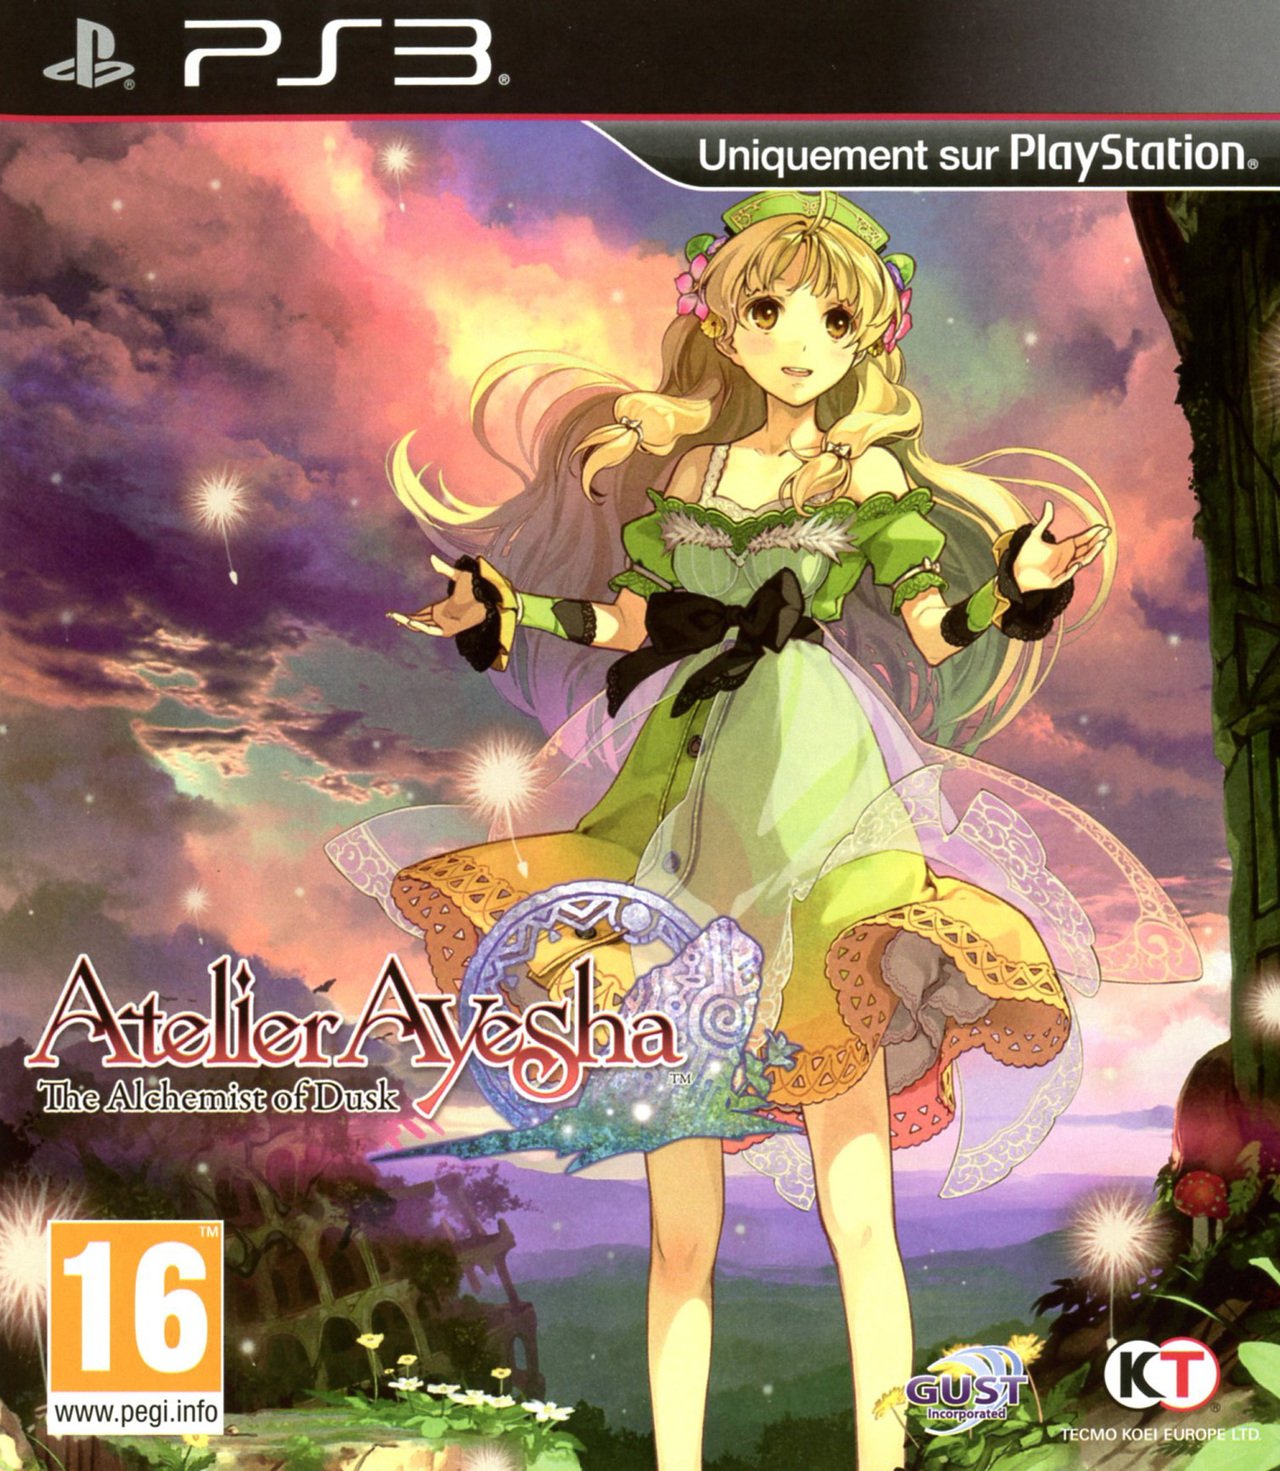 Caratula de Atelier Ayesha: Alchemist of Dusk para PlayStation 3